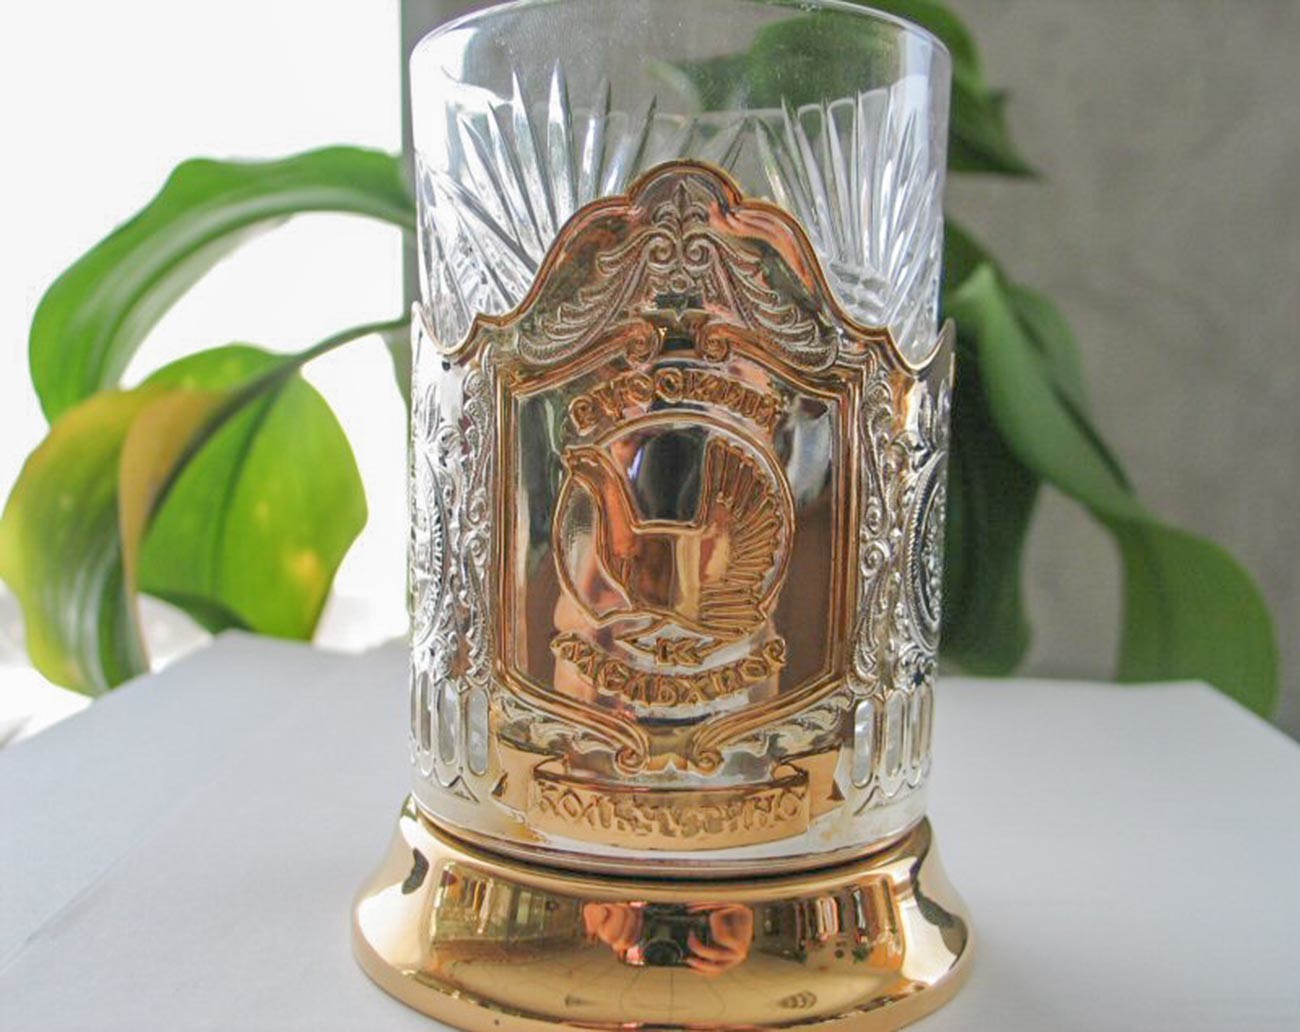 Podstakannik RUSSIAN TEA GLASS HOLDER the emblem of Russia 